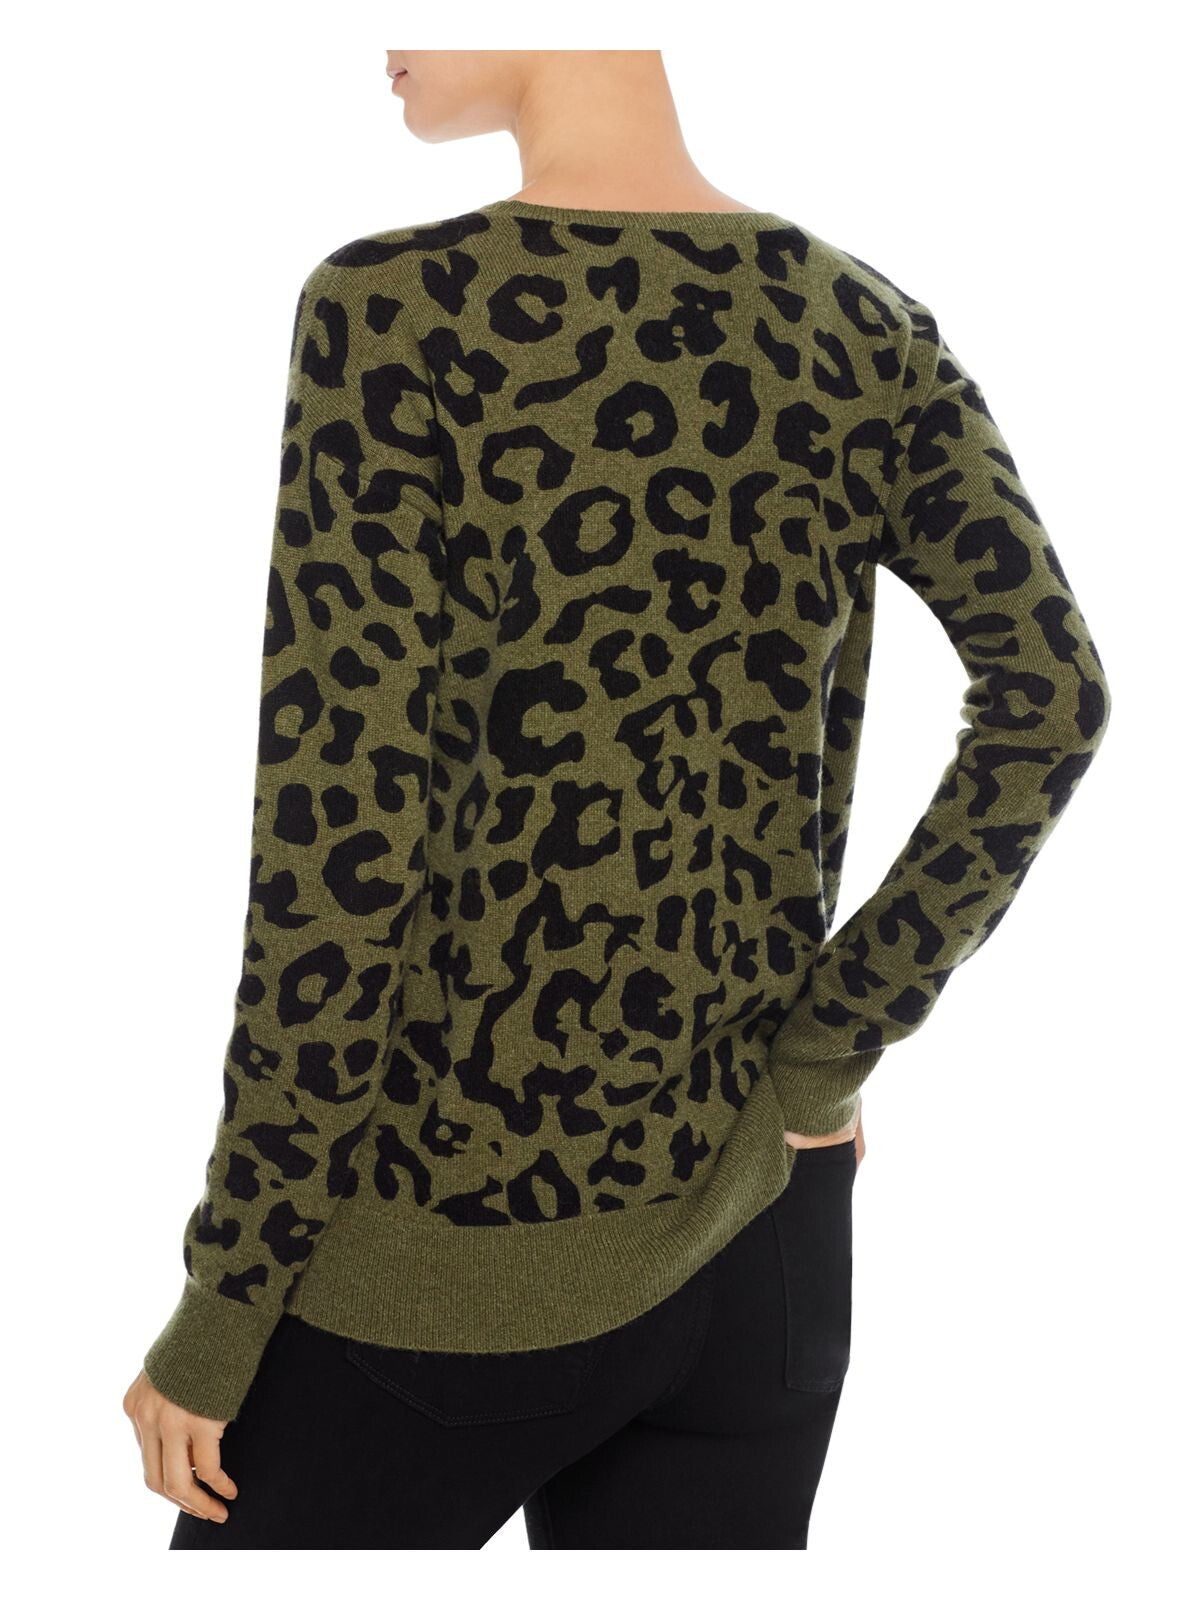 Designer Brand Womens Green Animal Print Long Sleeve Crew Neck Sweater S